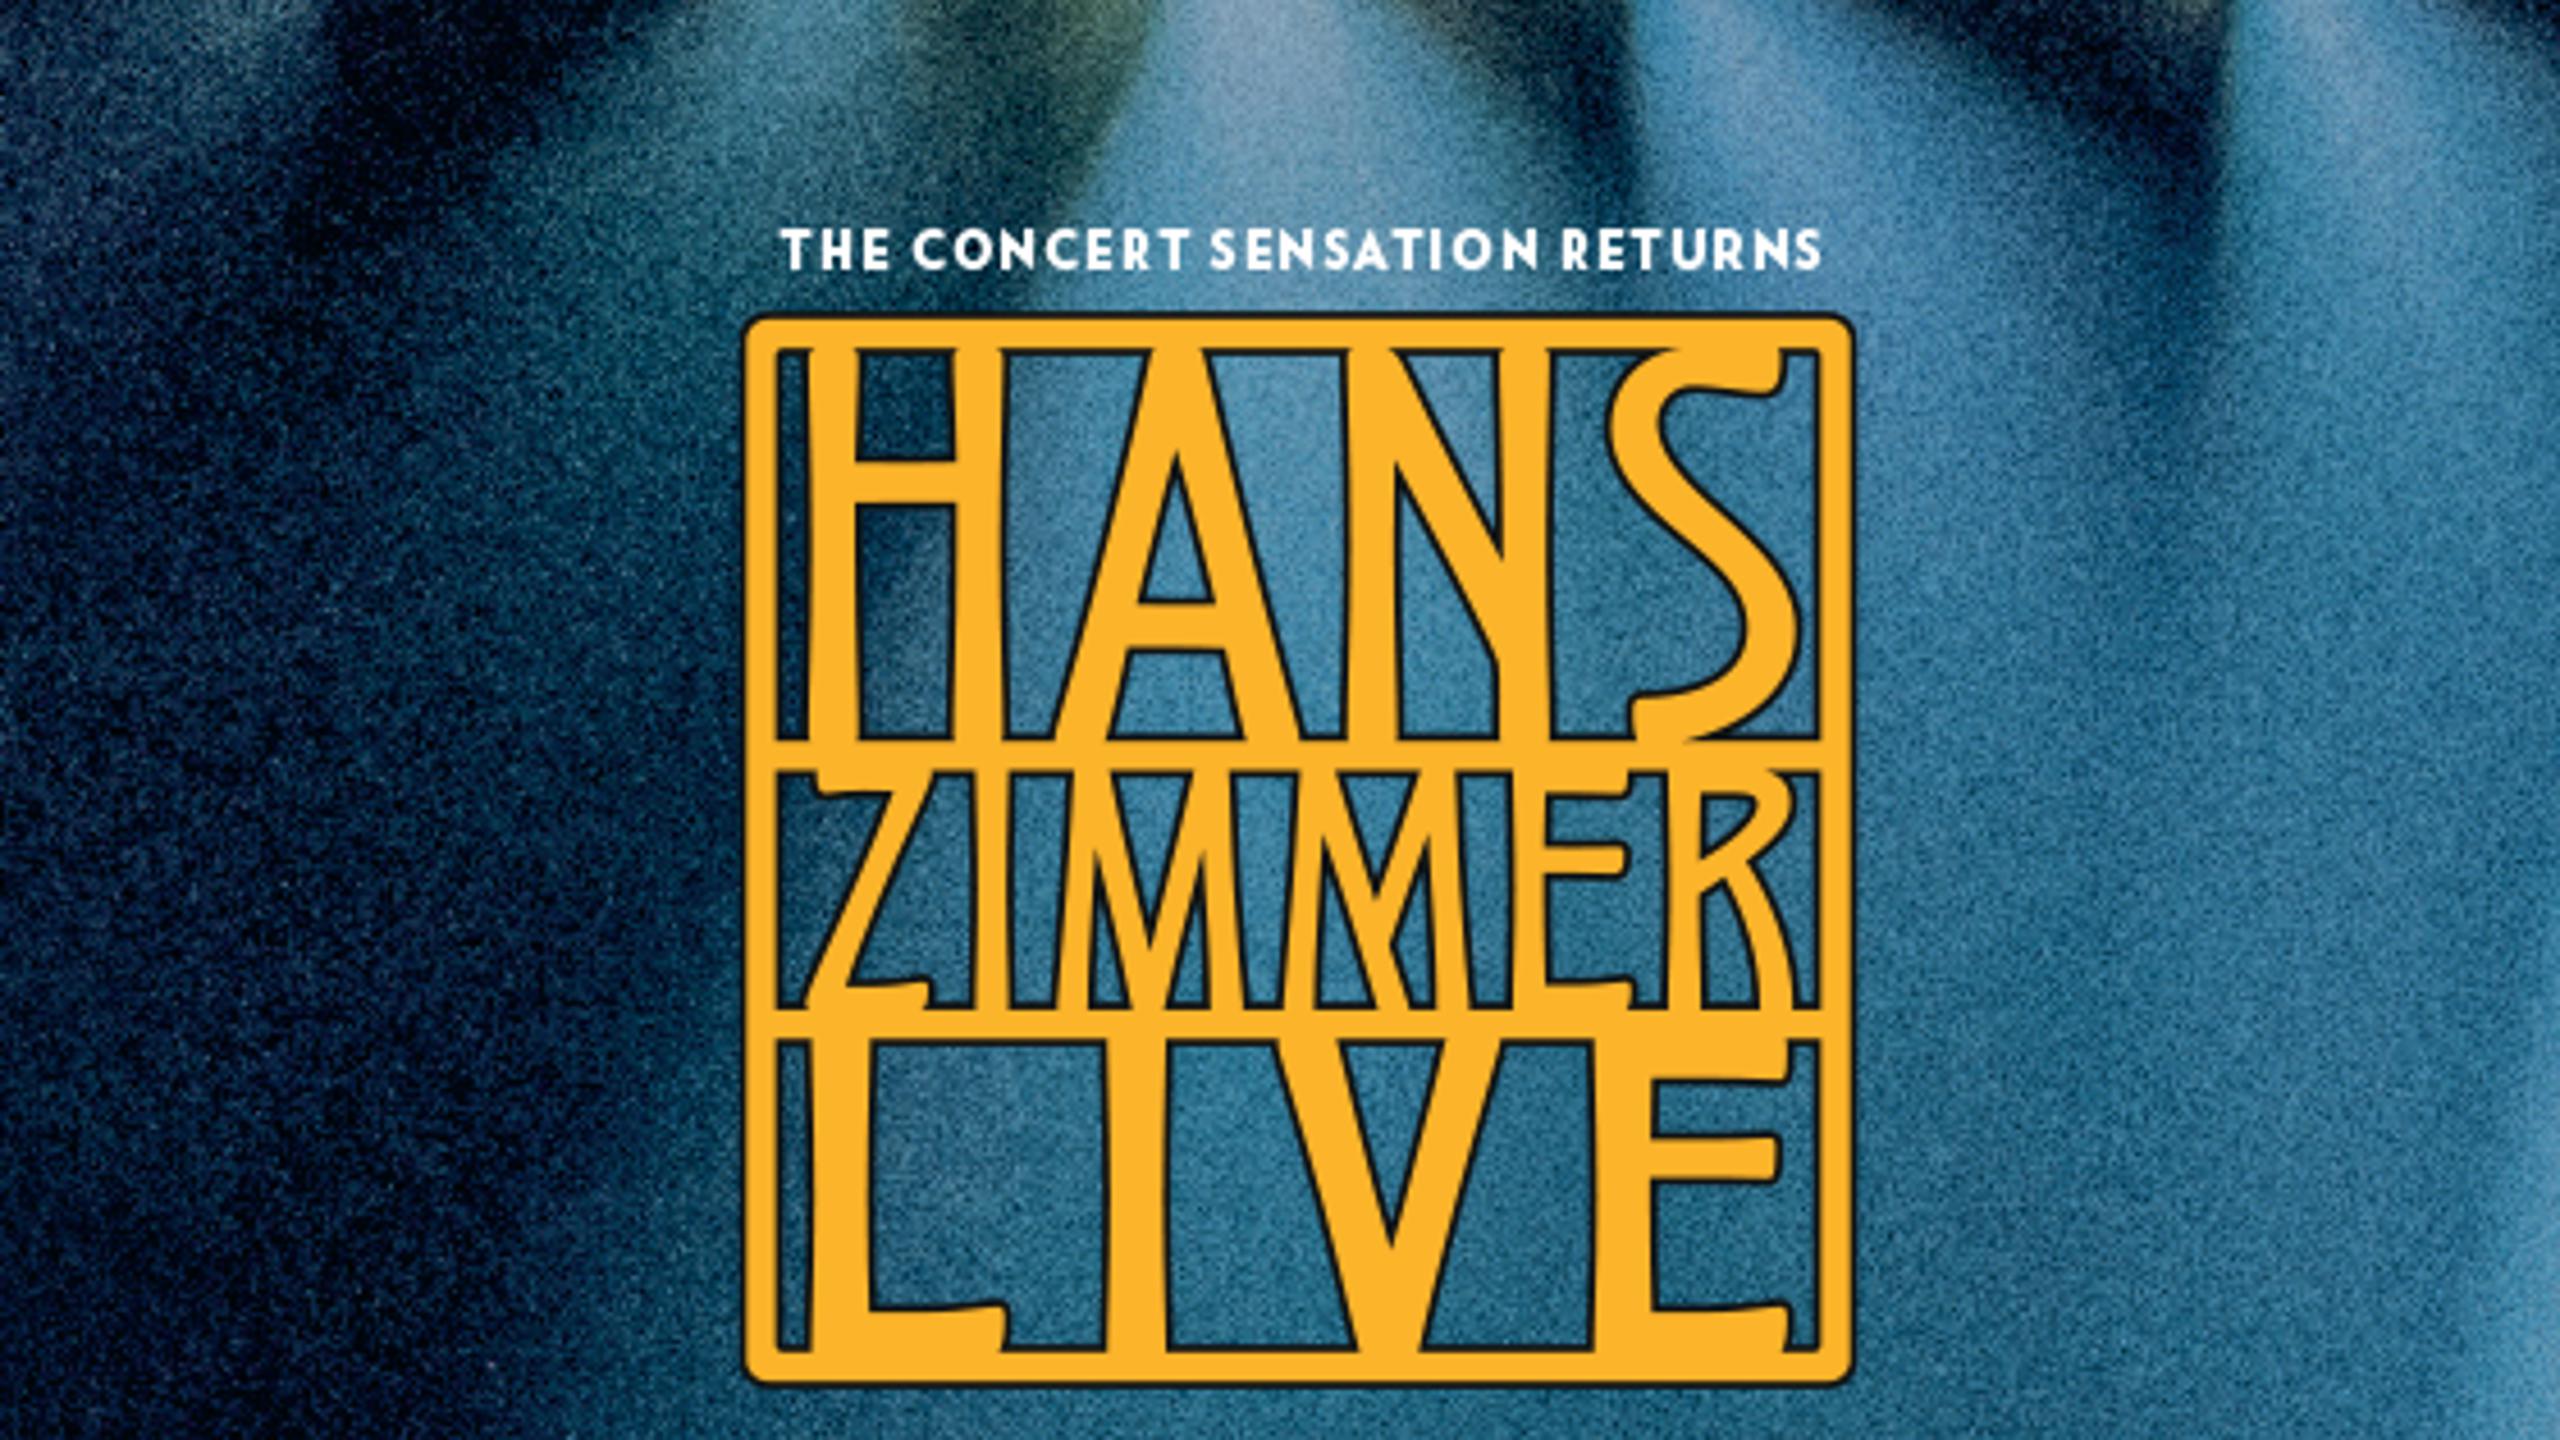 Hans Zimmer concert tickets for 3Arena, Dublin Sunday, 18 June 2023